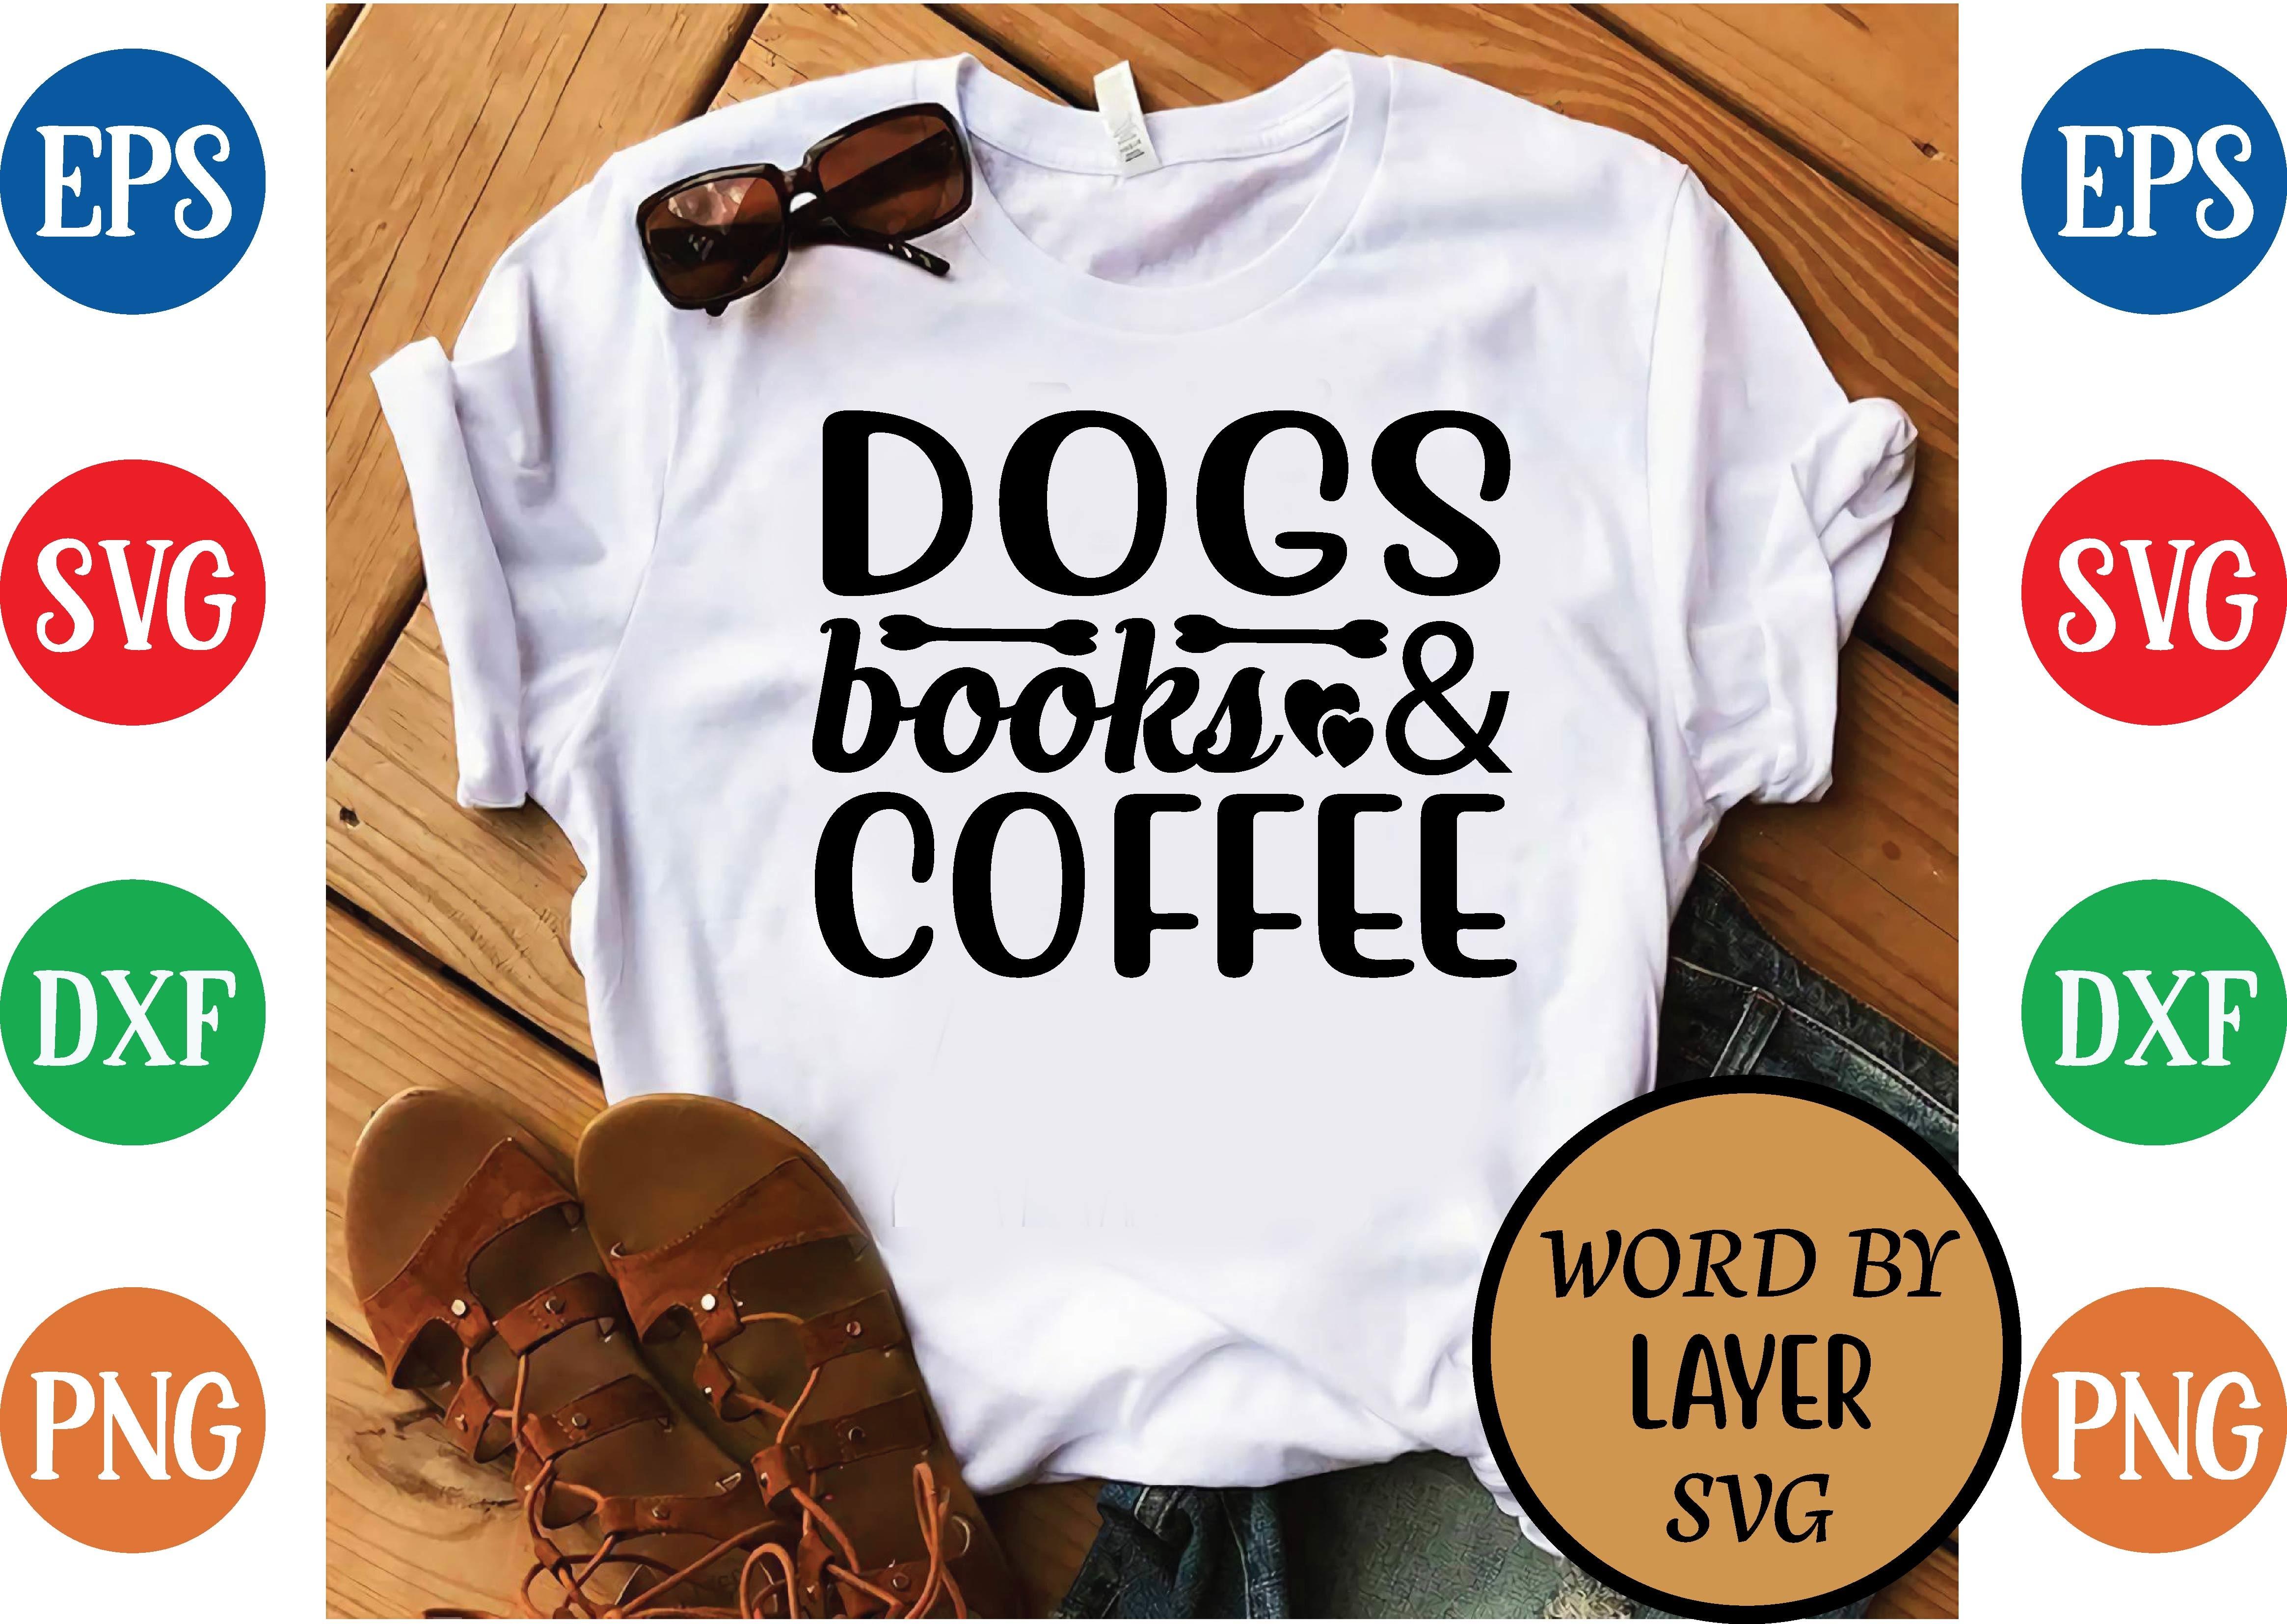 Dogs Books & Coffee